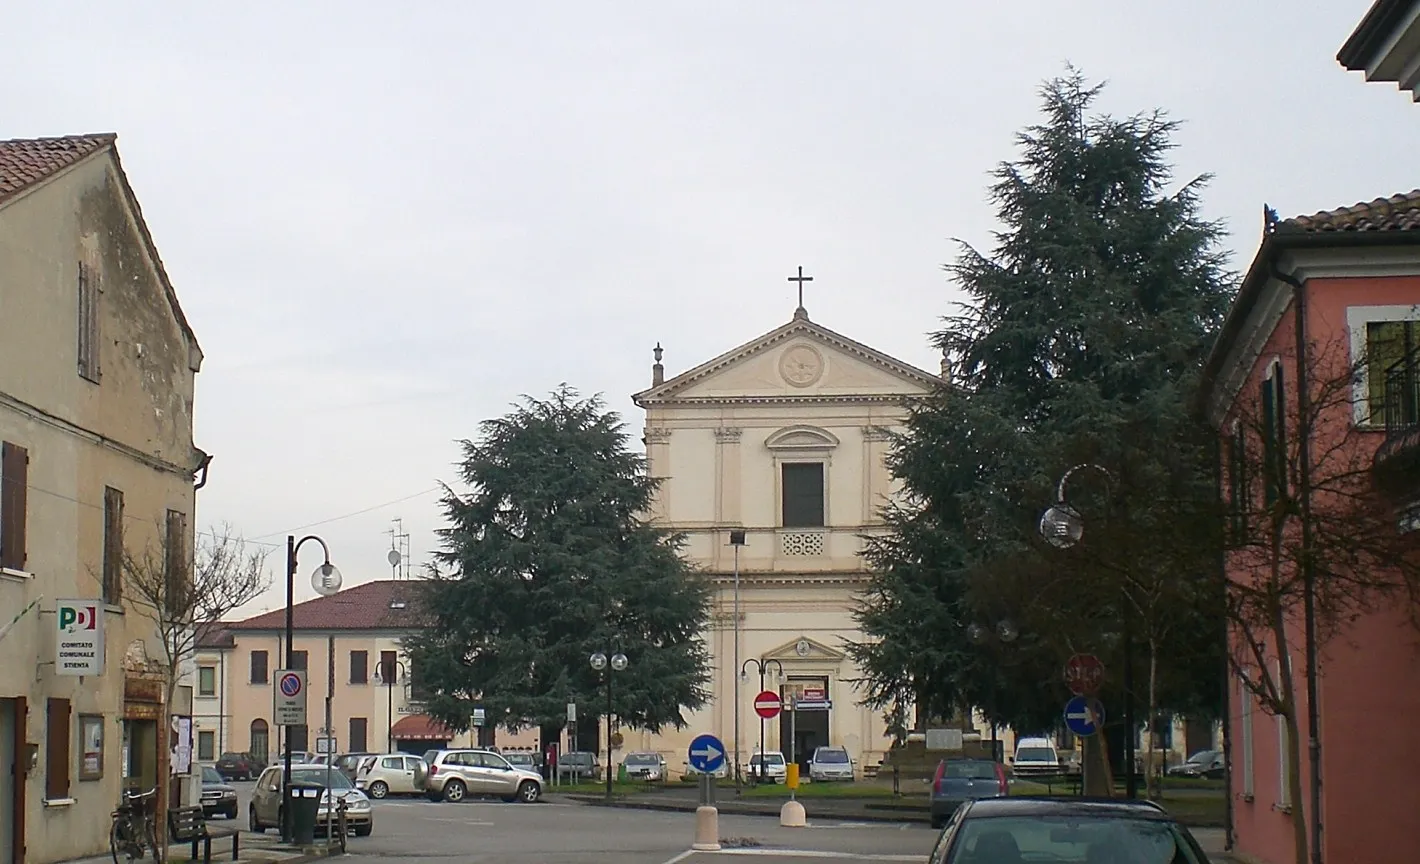 Image of Veneto